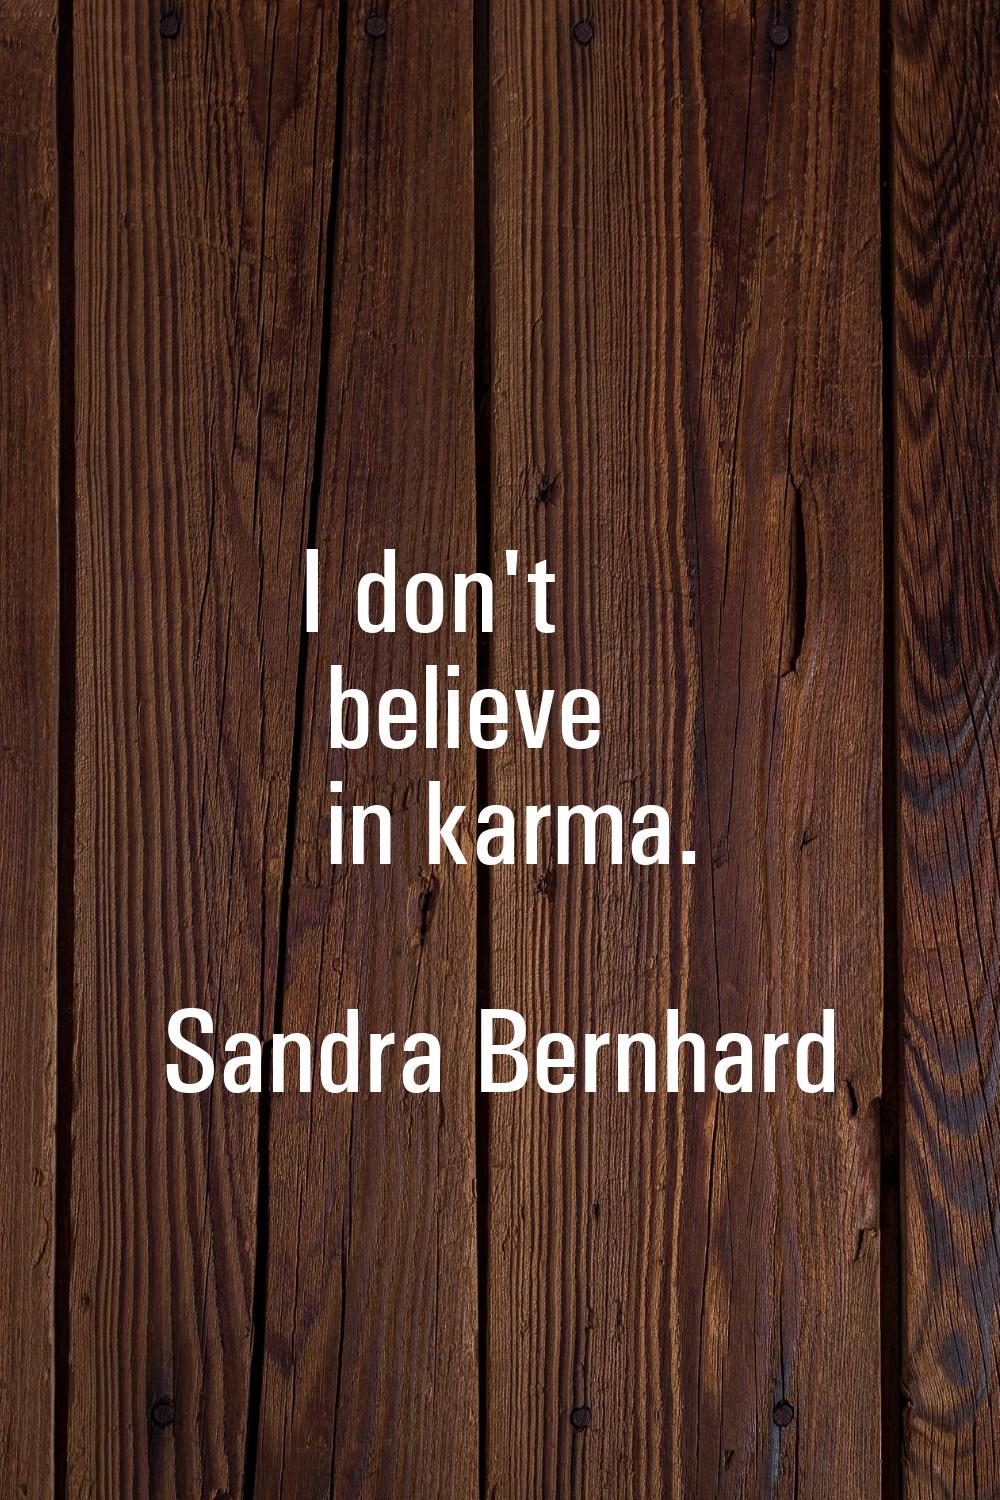 I don't believe in karma.